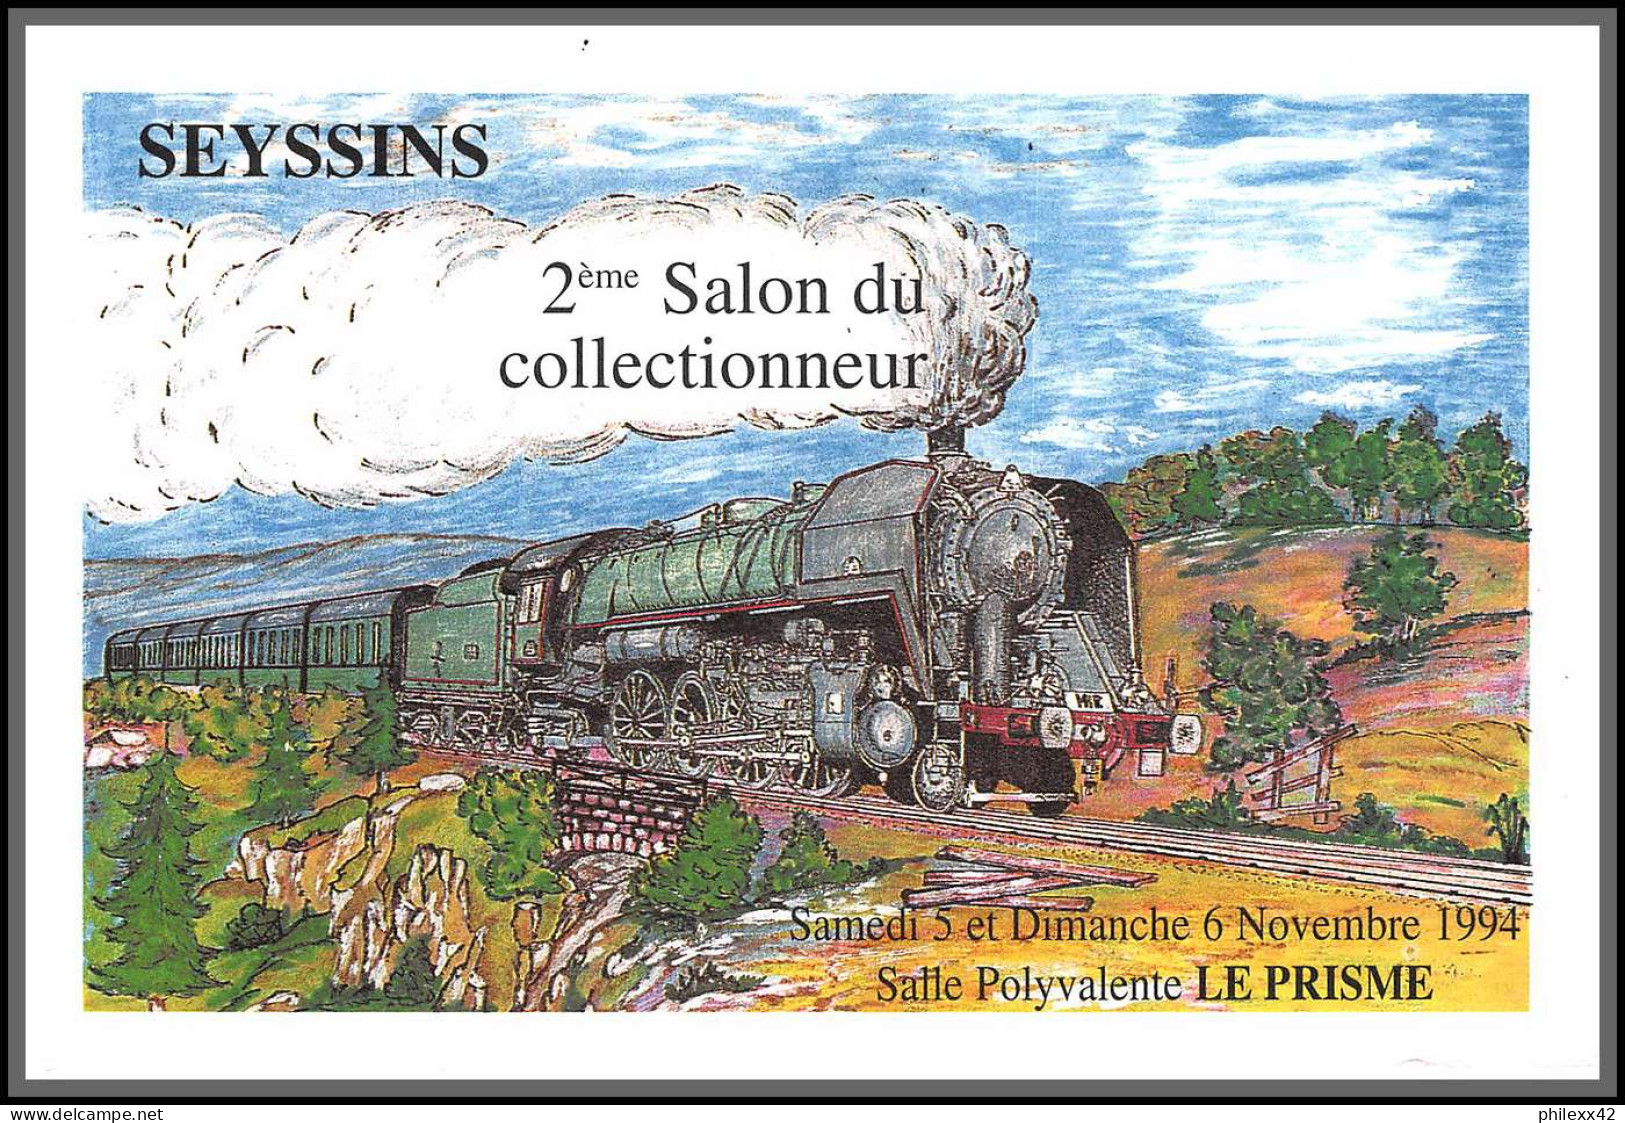 74328 Mixte Atm Briat 3/3/1997 Saul Guyane Echirolles Isère France Carte Postcard Colonies Seyssin - Brieven En Documenten